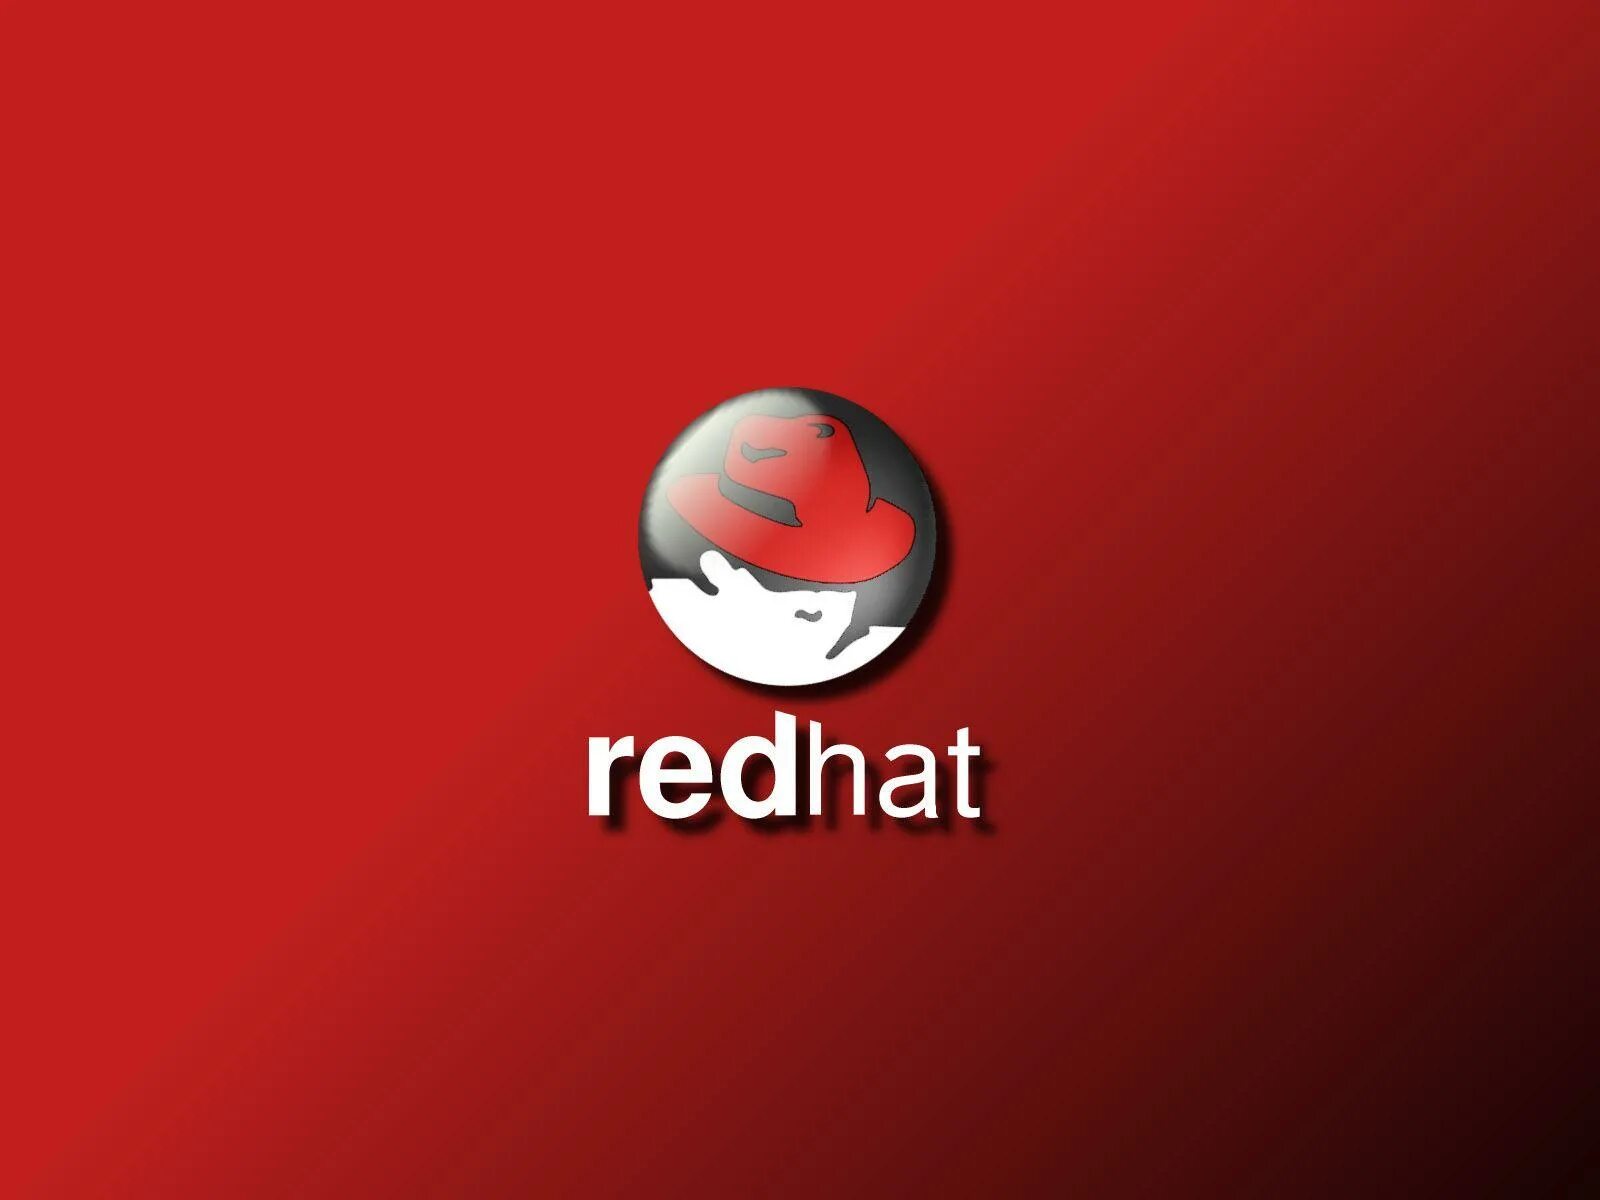 Ред хат. Линукс Red hat. Red hat Enterprise Linux 7. Red hat Enterprise Linux. Red hat Enterprise Linux логотип.